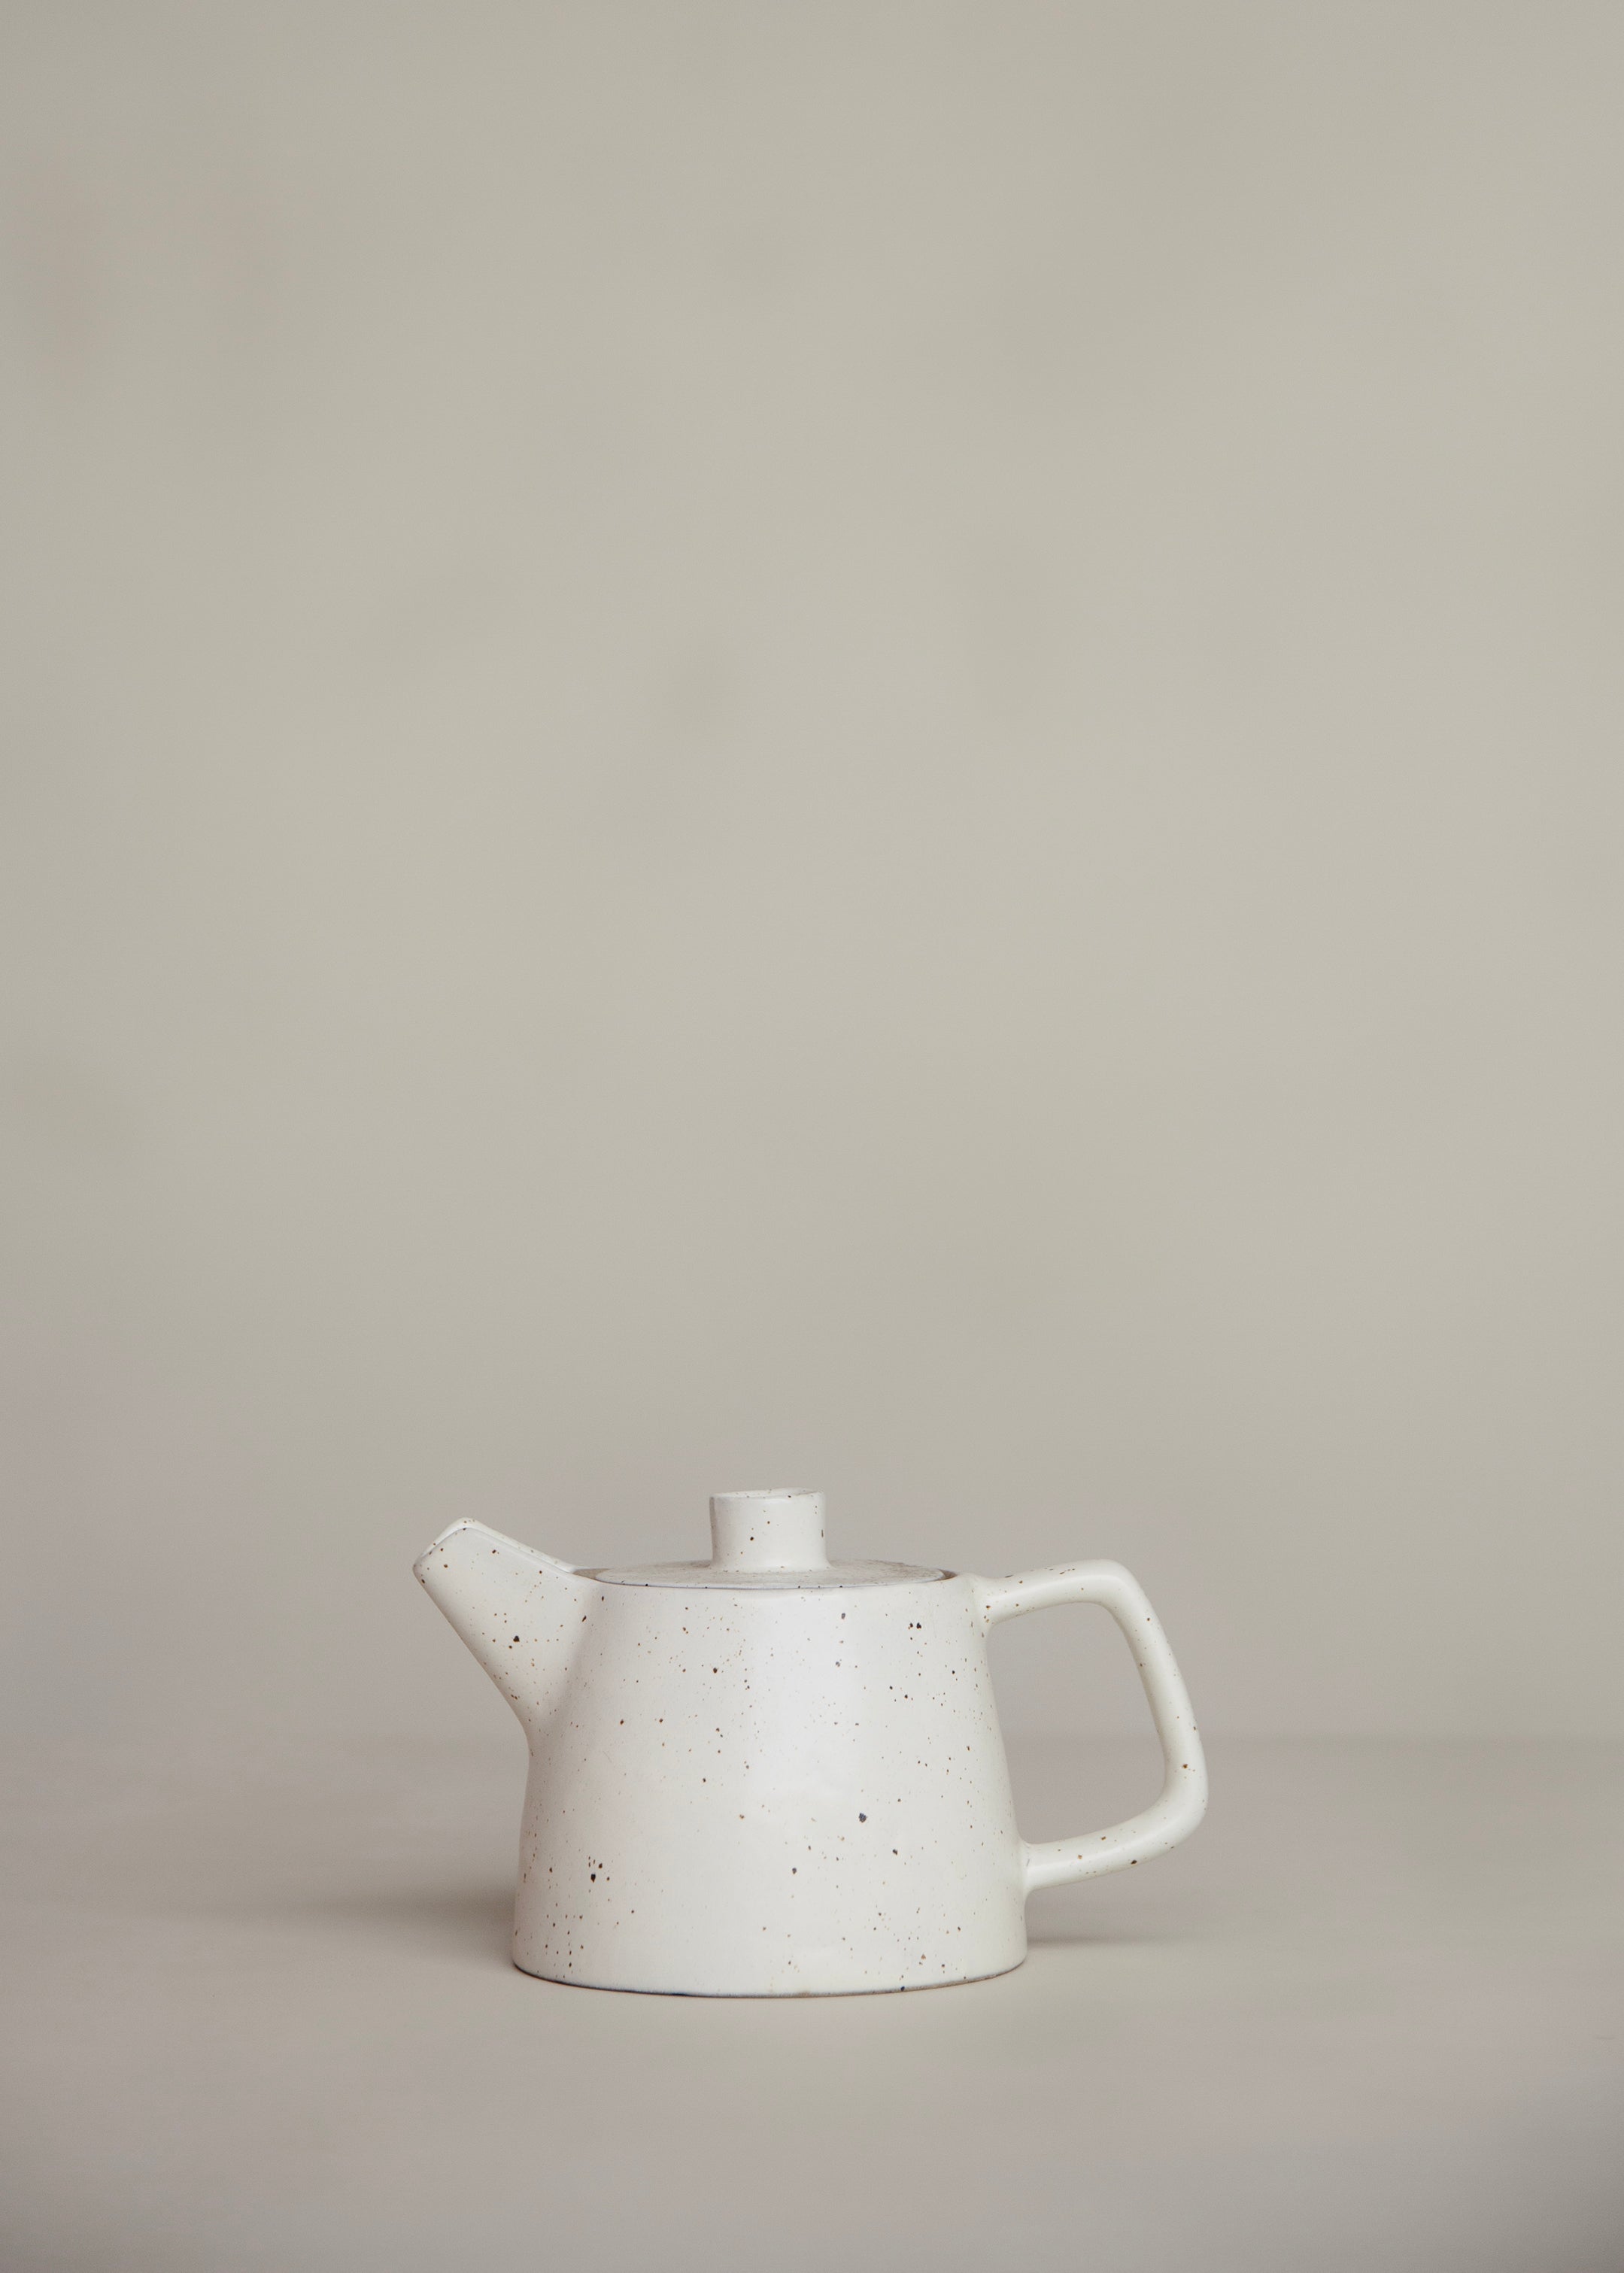 Ageng Tea Pot / Speckled White